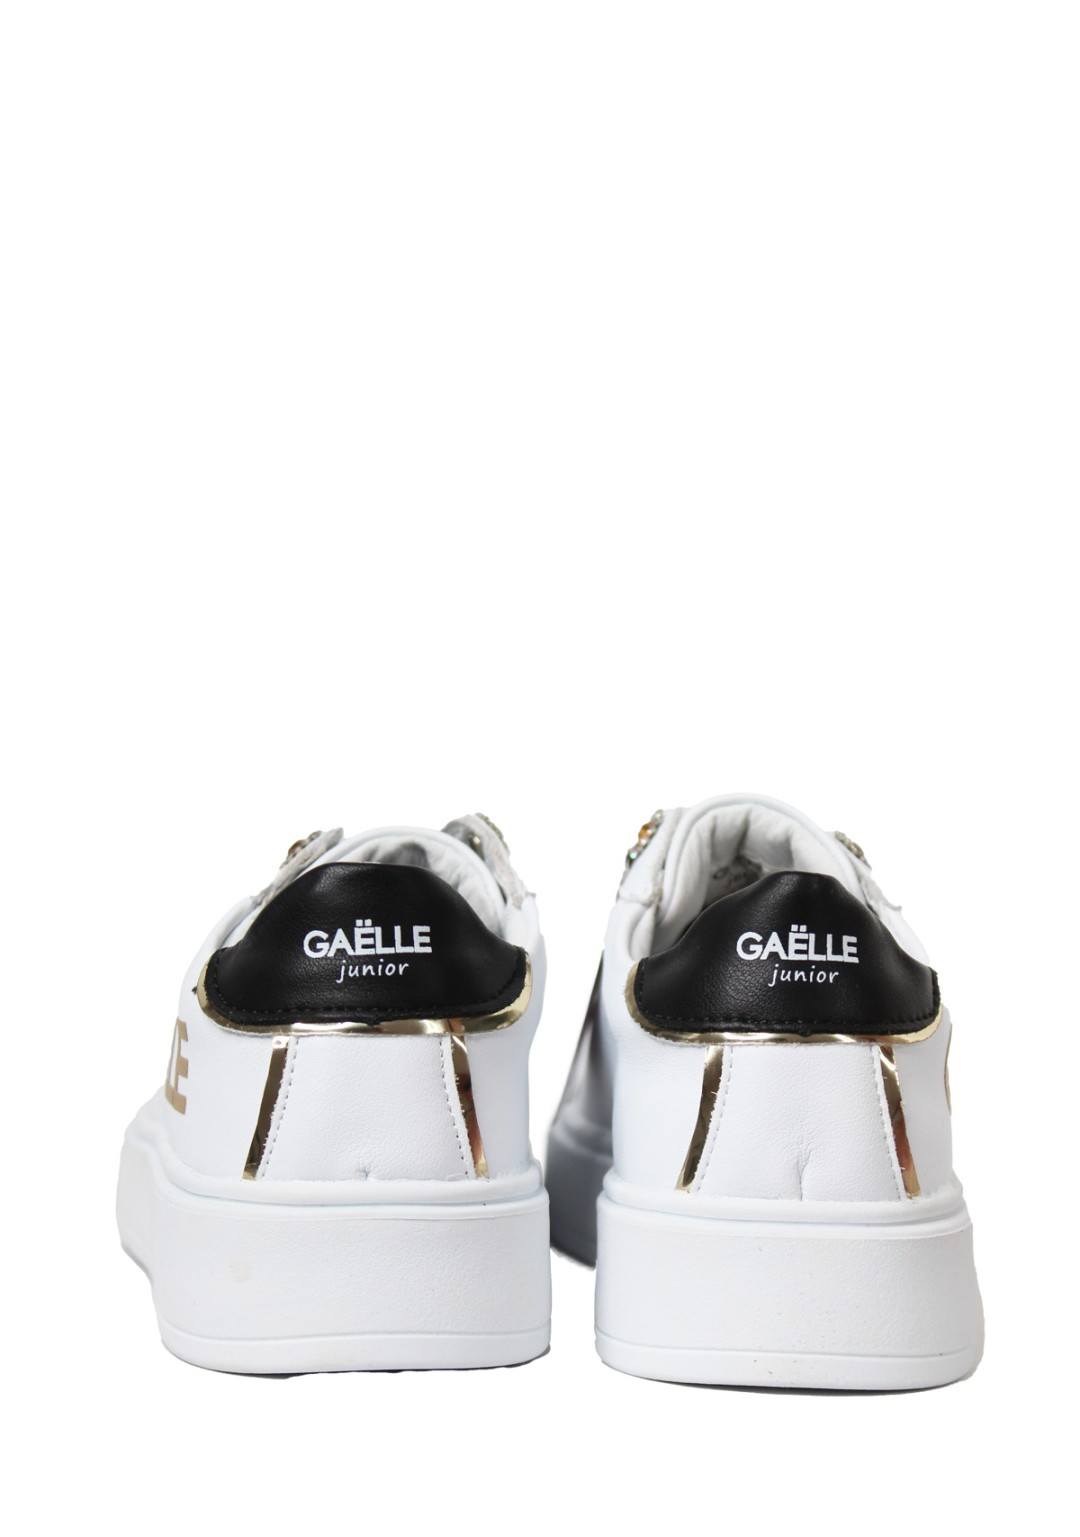 GAëLLE PARIS - Sneaker Scritta - Bambine e ragazze - GS0006L Chloe